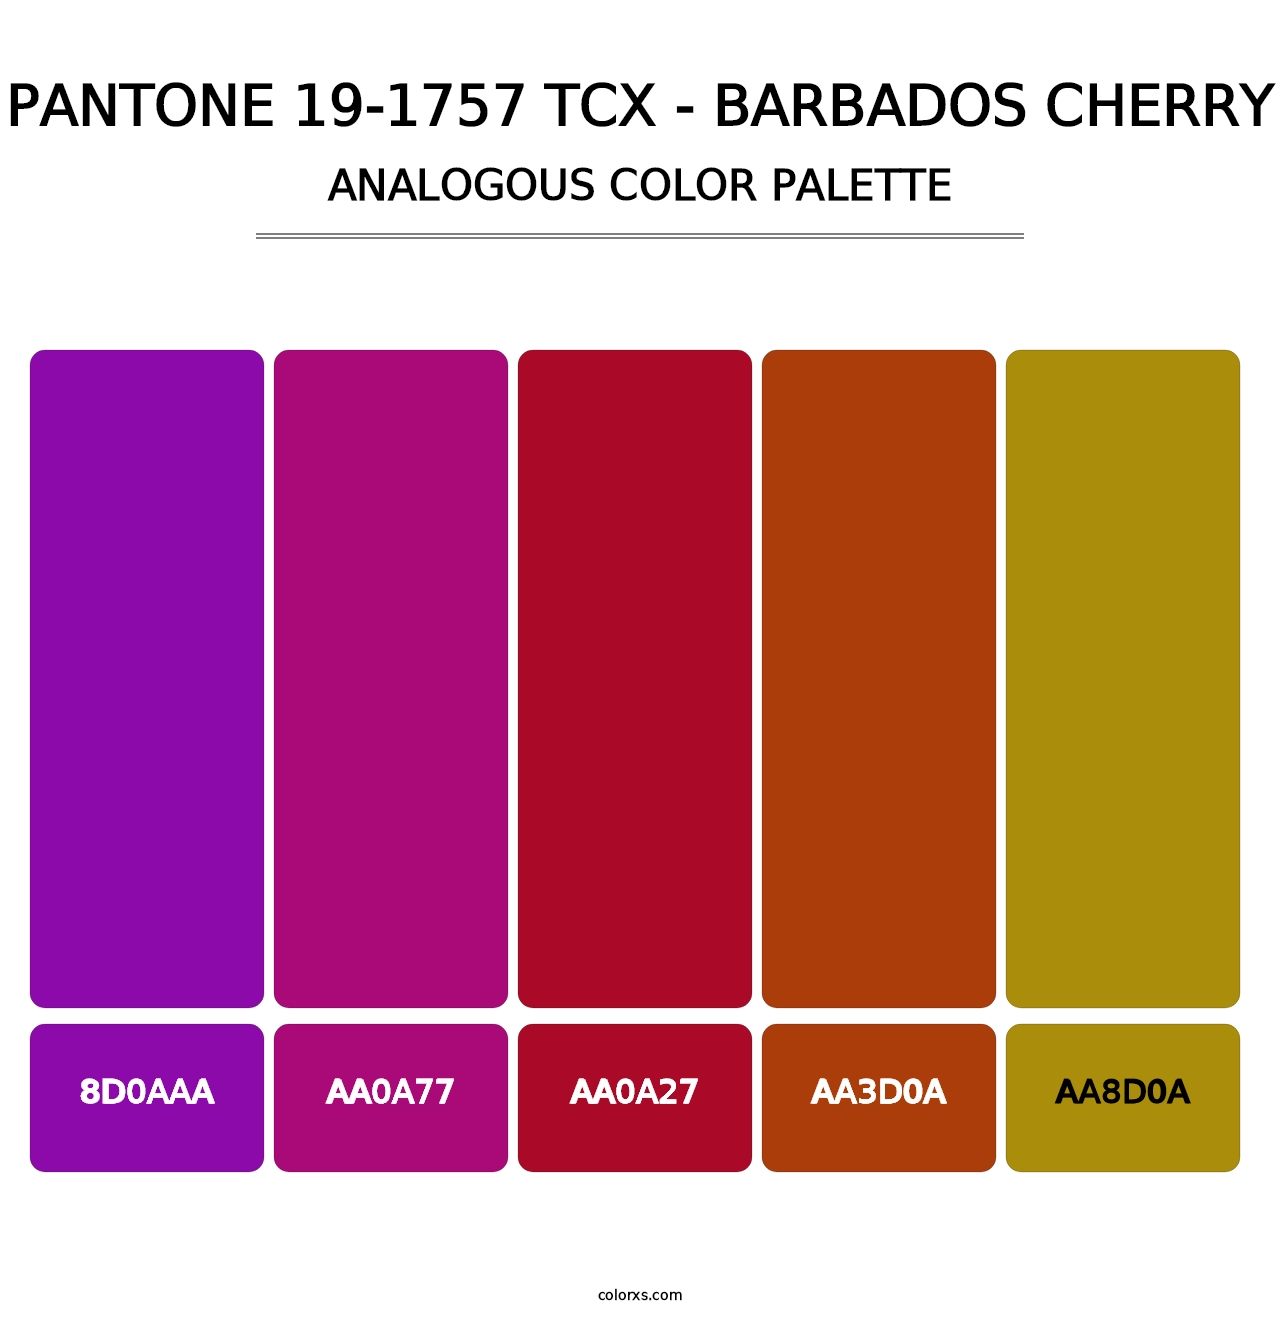 PANTONE 19-1757 TCX - Barbados Cherry - Analogous Color Palette